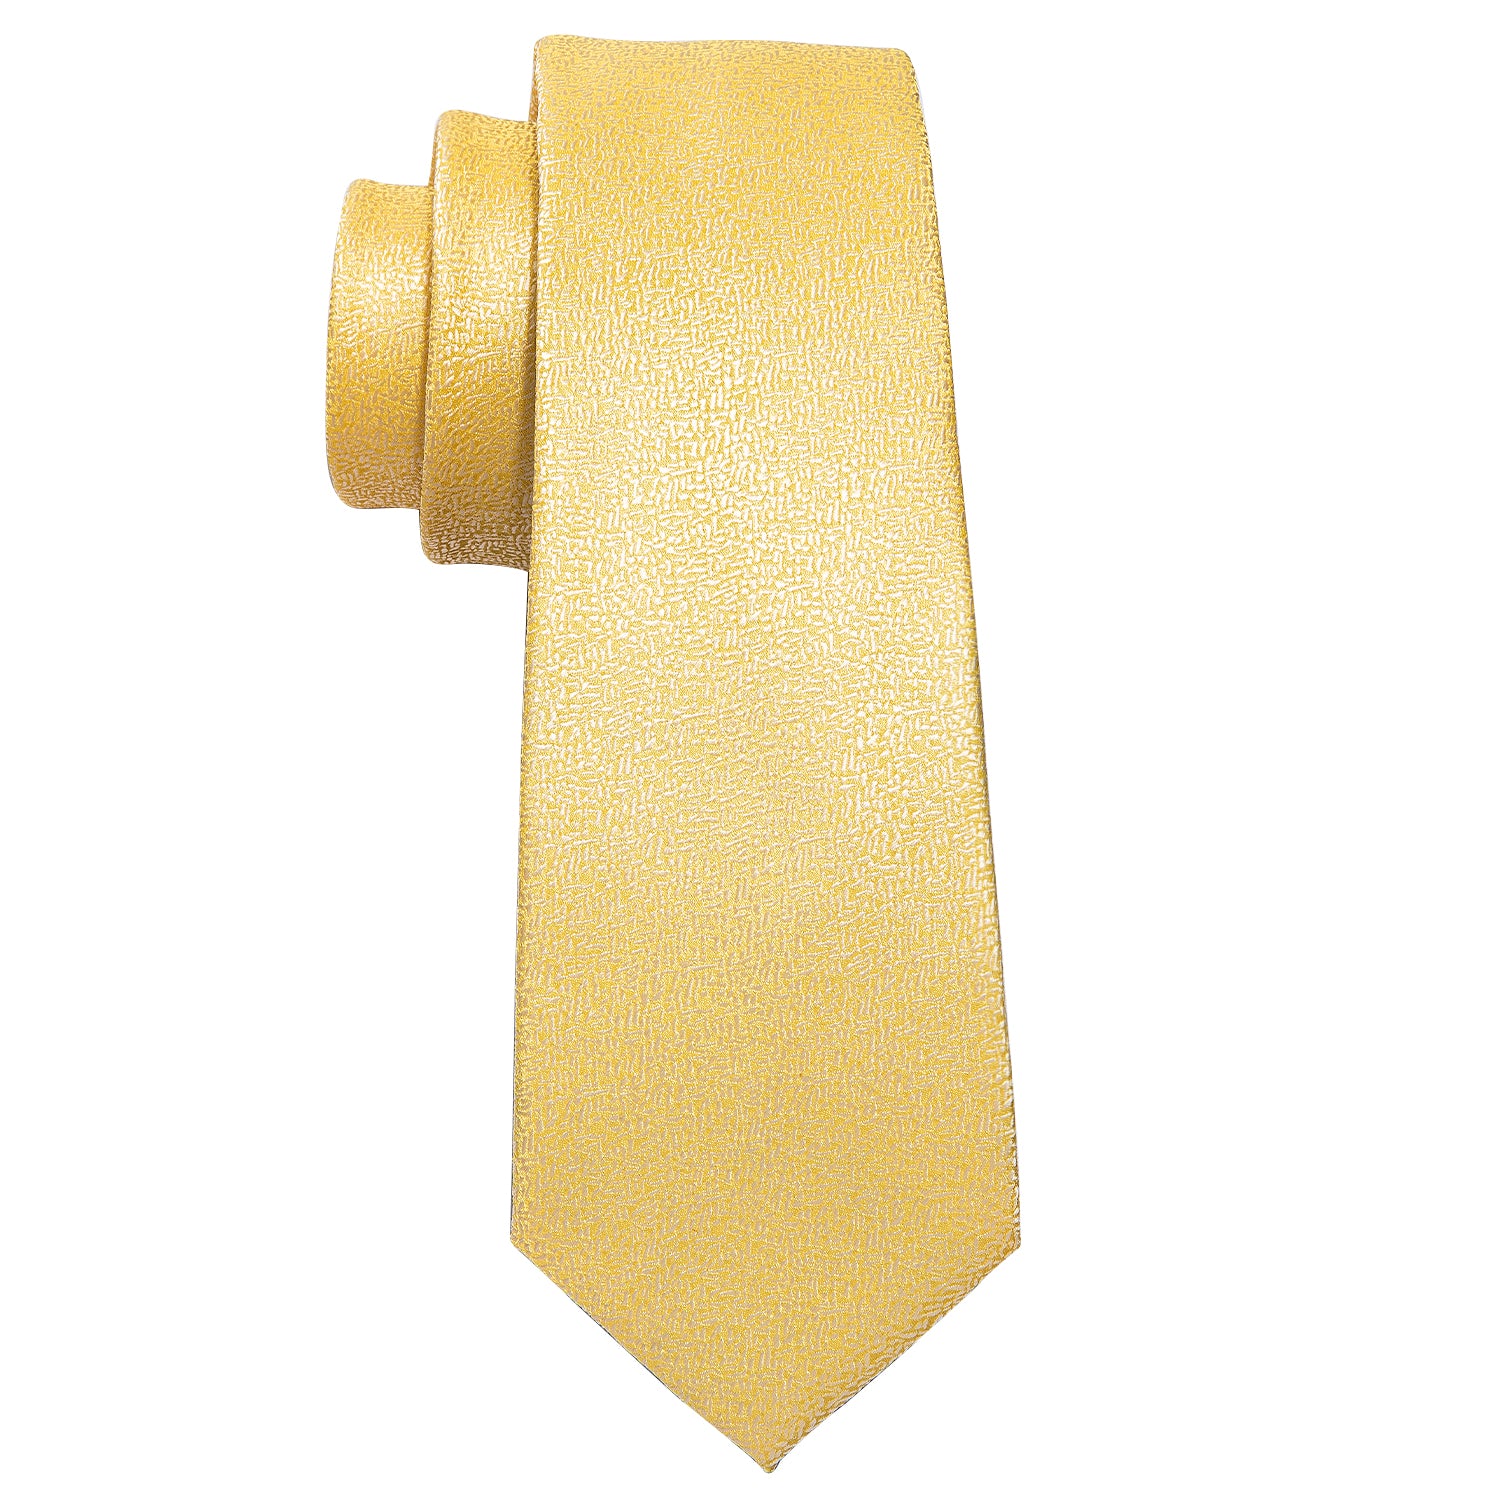 Golden Solid Silk Men's Tie Pocket Square Cufflinks Set